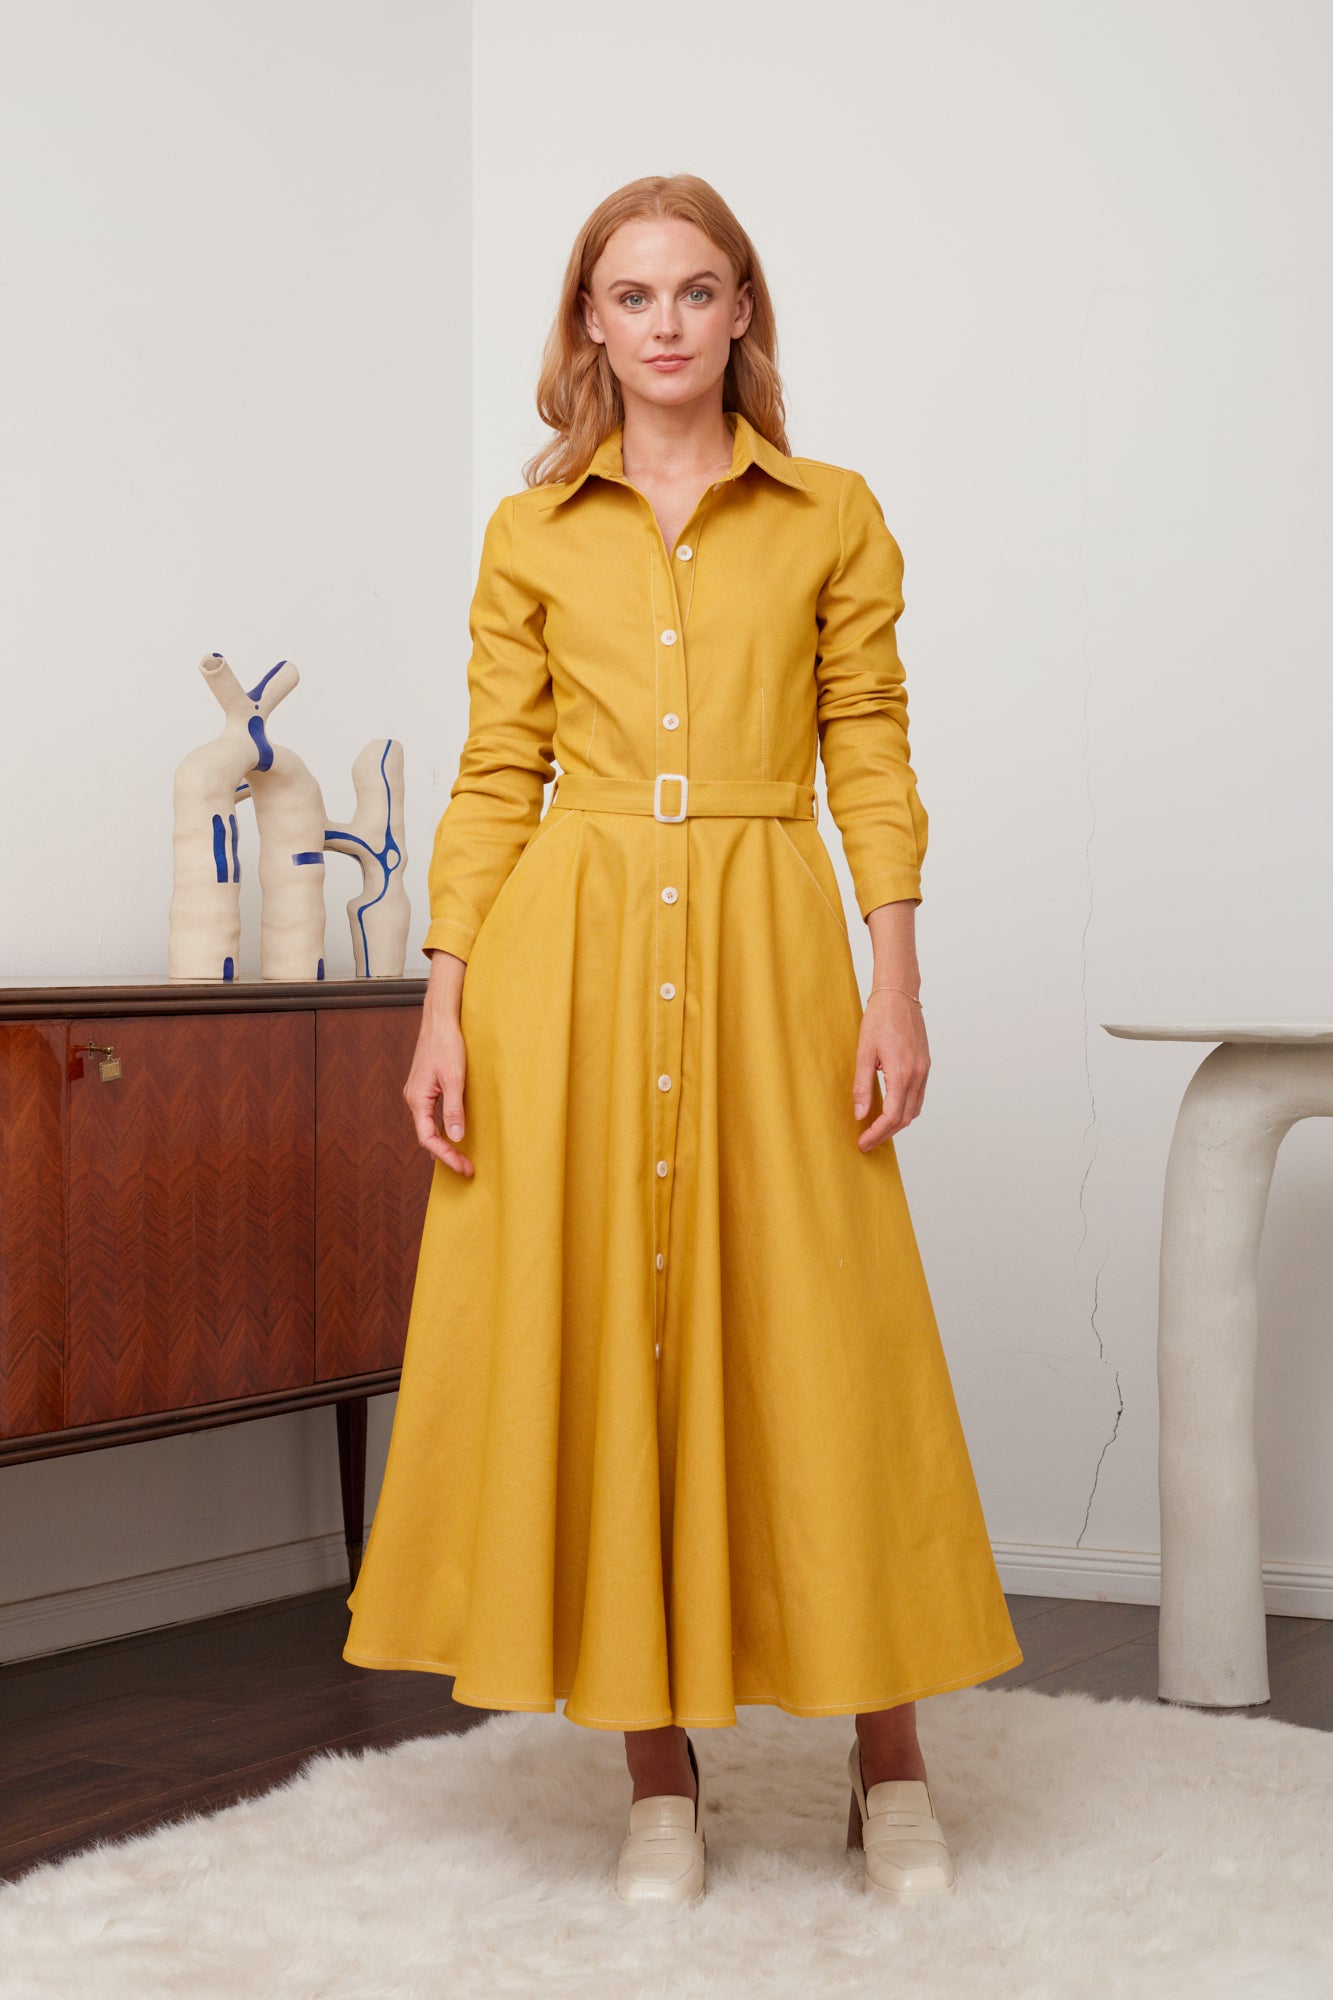 ESTI Classy Yellow Denim Midi Shirt Dress - Sophisticated and Stylish